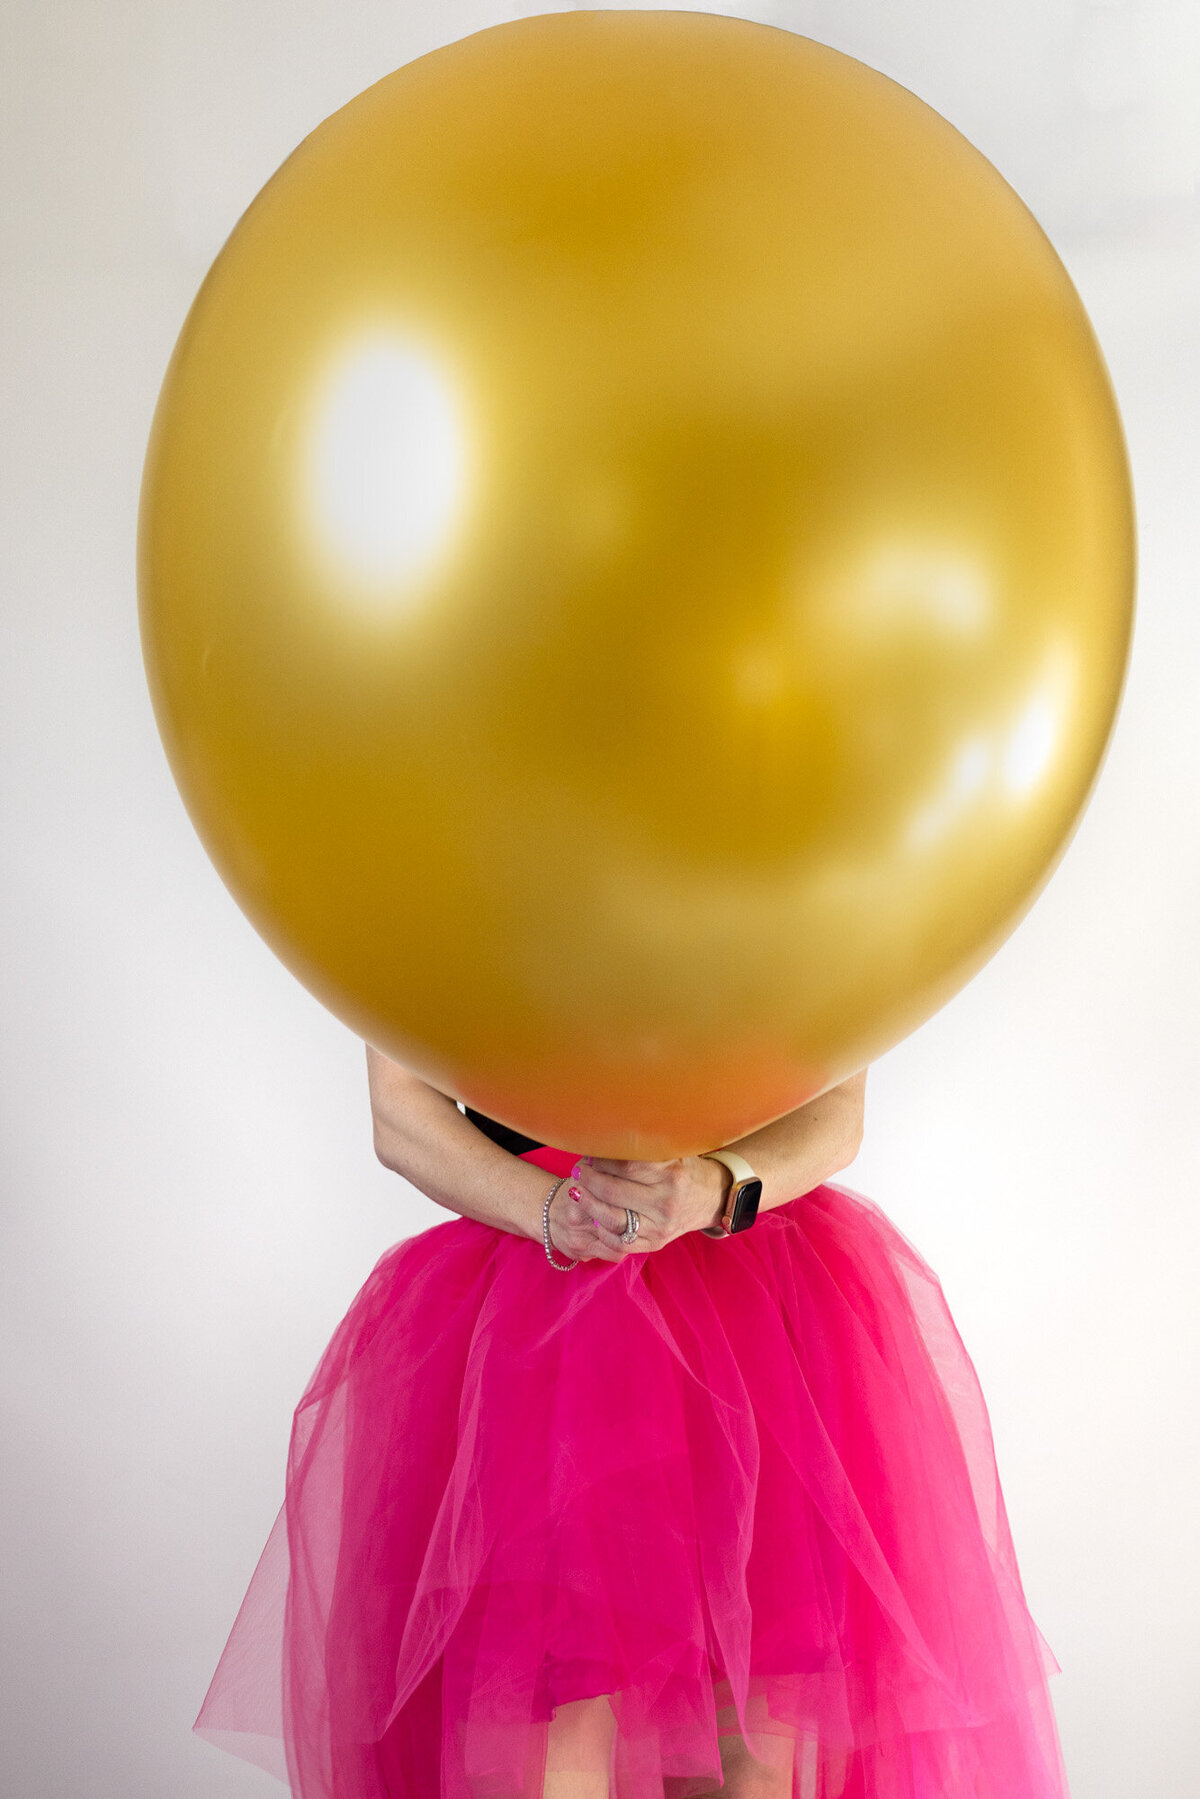 balloon business brand photo shoot_nicolebedard-2